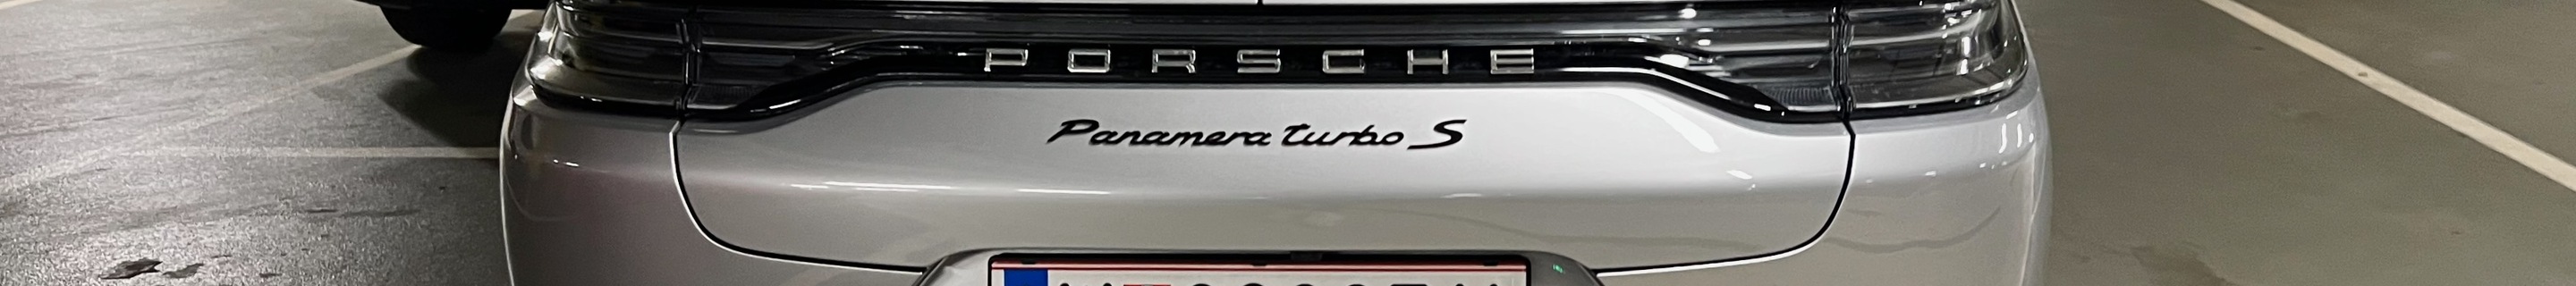 Porsche 971 Panamera Turbo S MkII